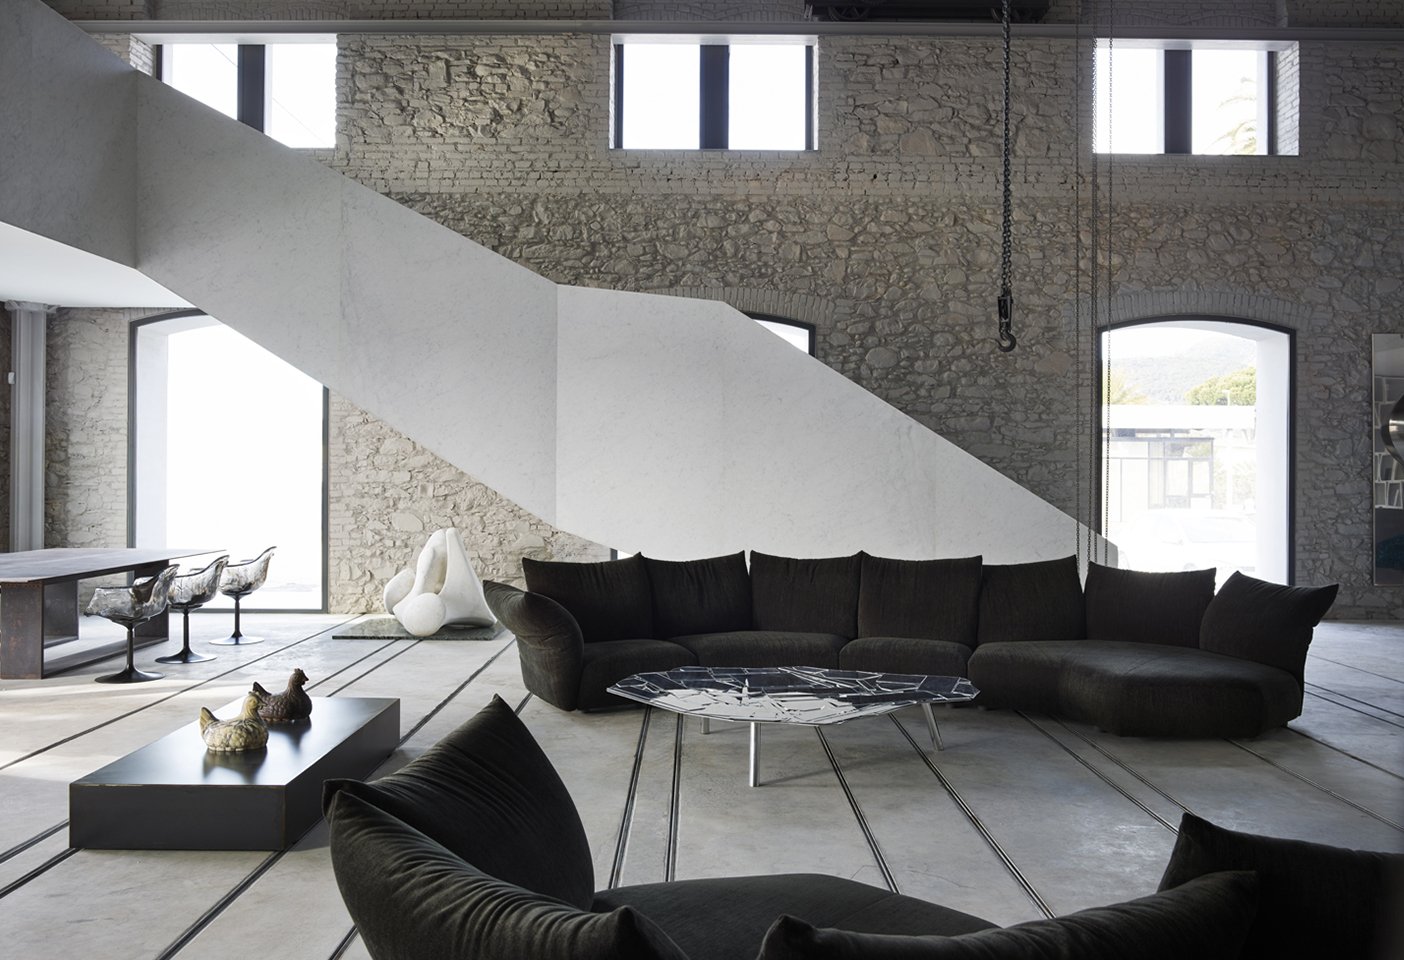 The Standard sofa by Francesco Binfaré for Edra. Photo c/o Edra.